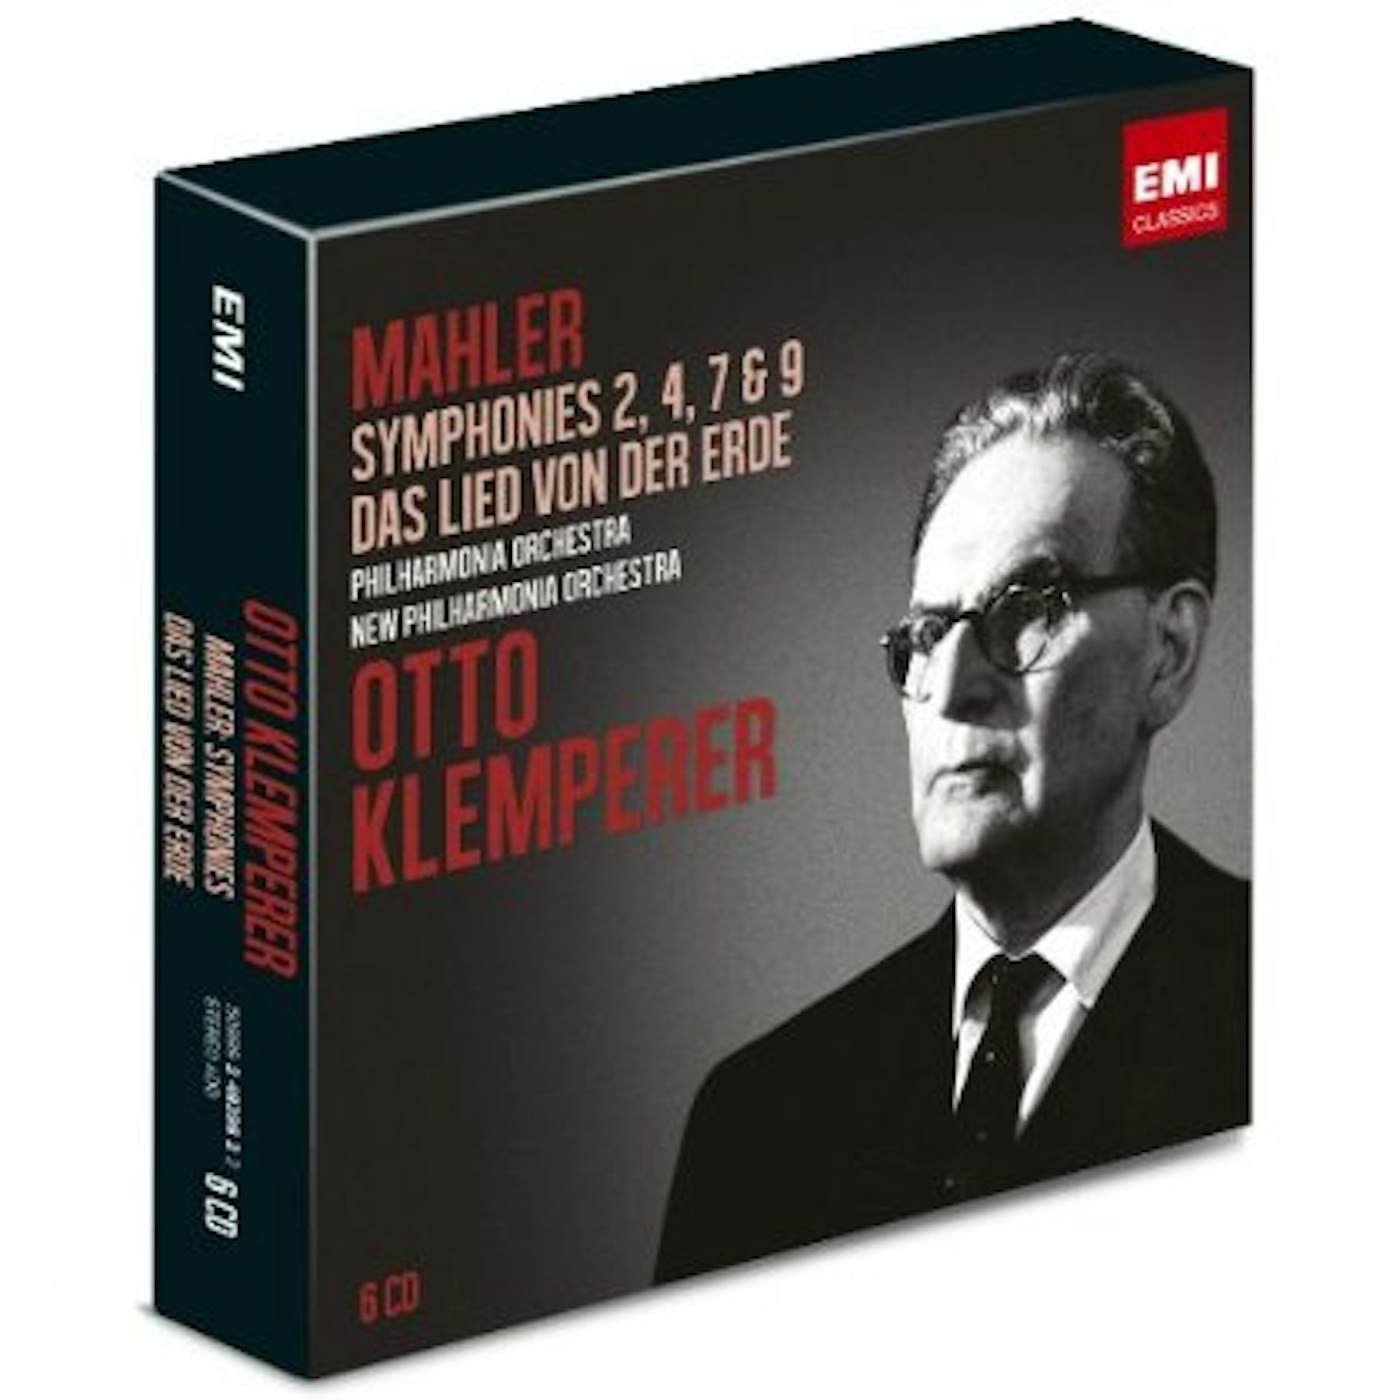 Otto Klemperer MAHLER: SYMPHONIES 2 4 7 & 9 CD